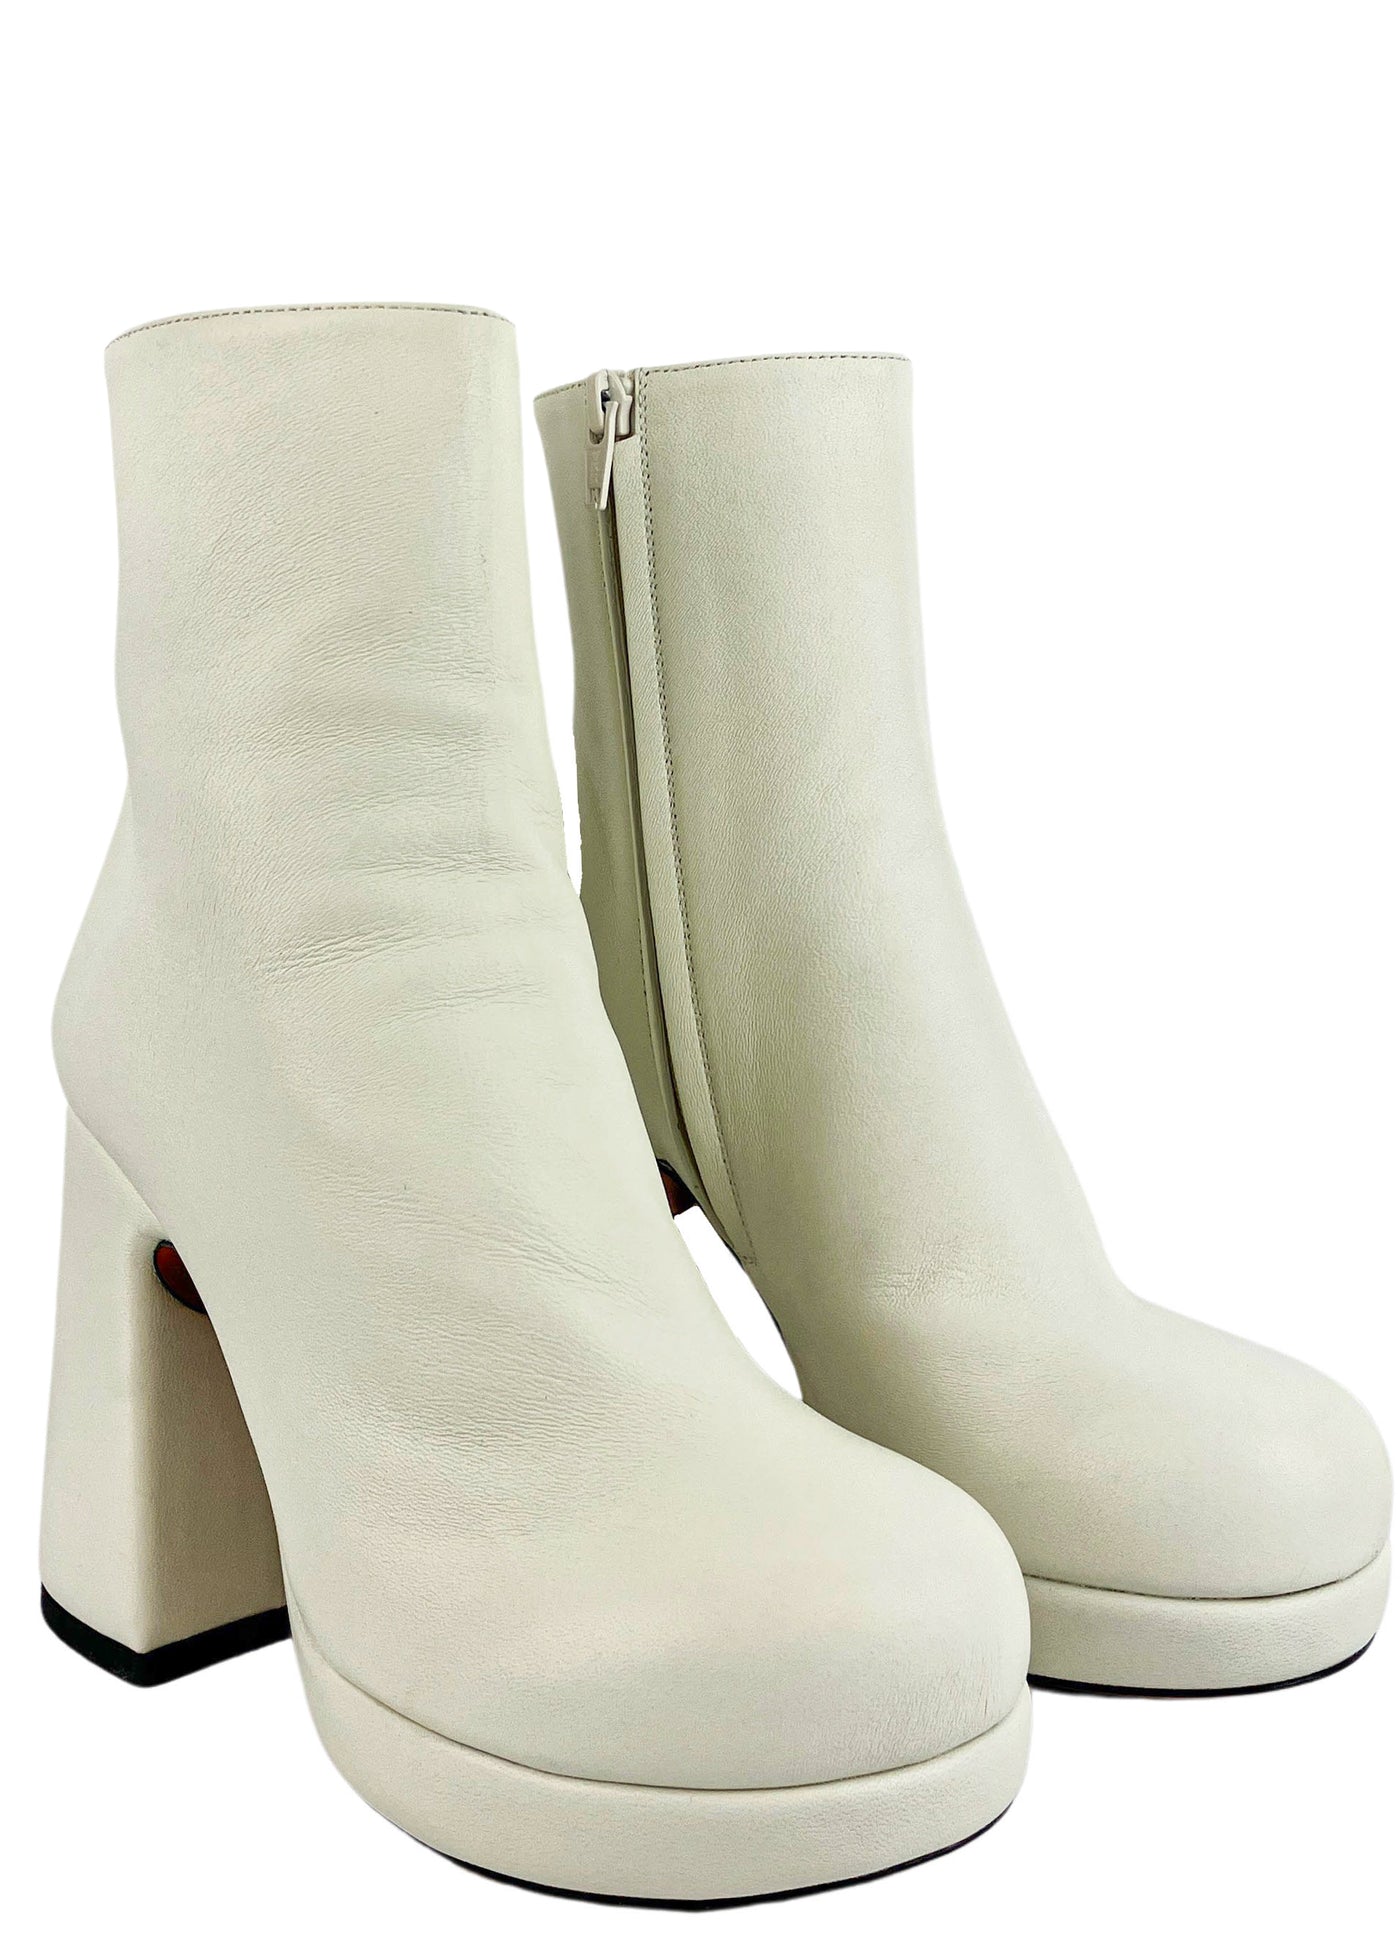 Proenza Schouler Forma Platform Boots in Chantilly - Discounts on Proenza Schouler at UAL